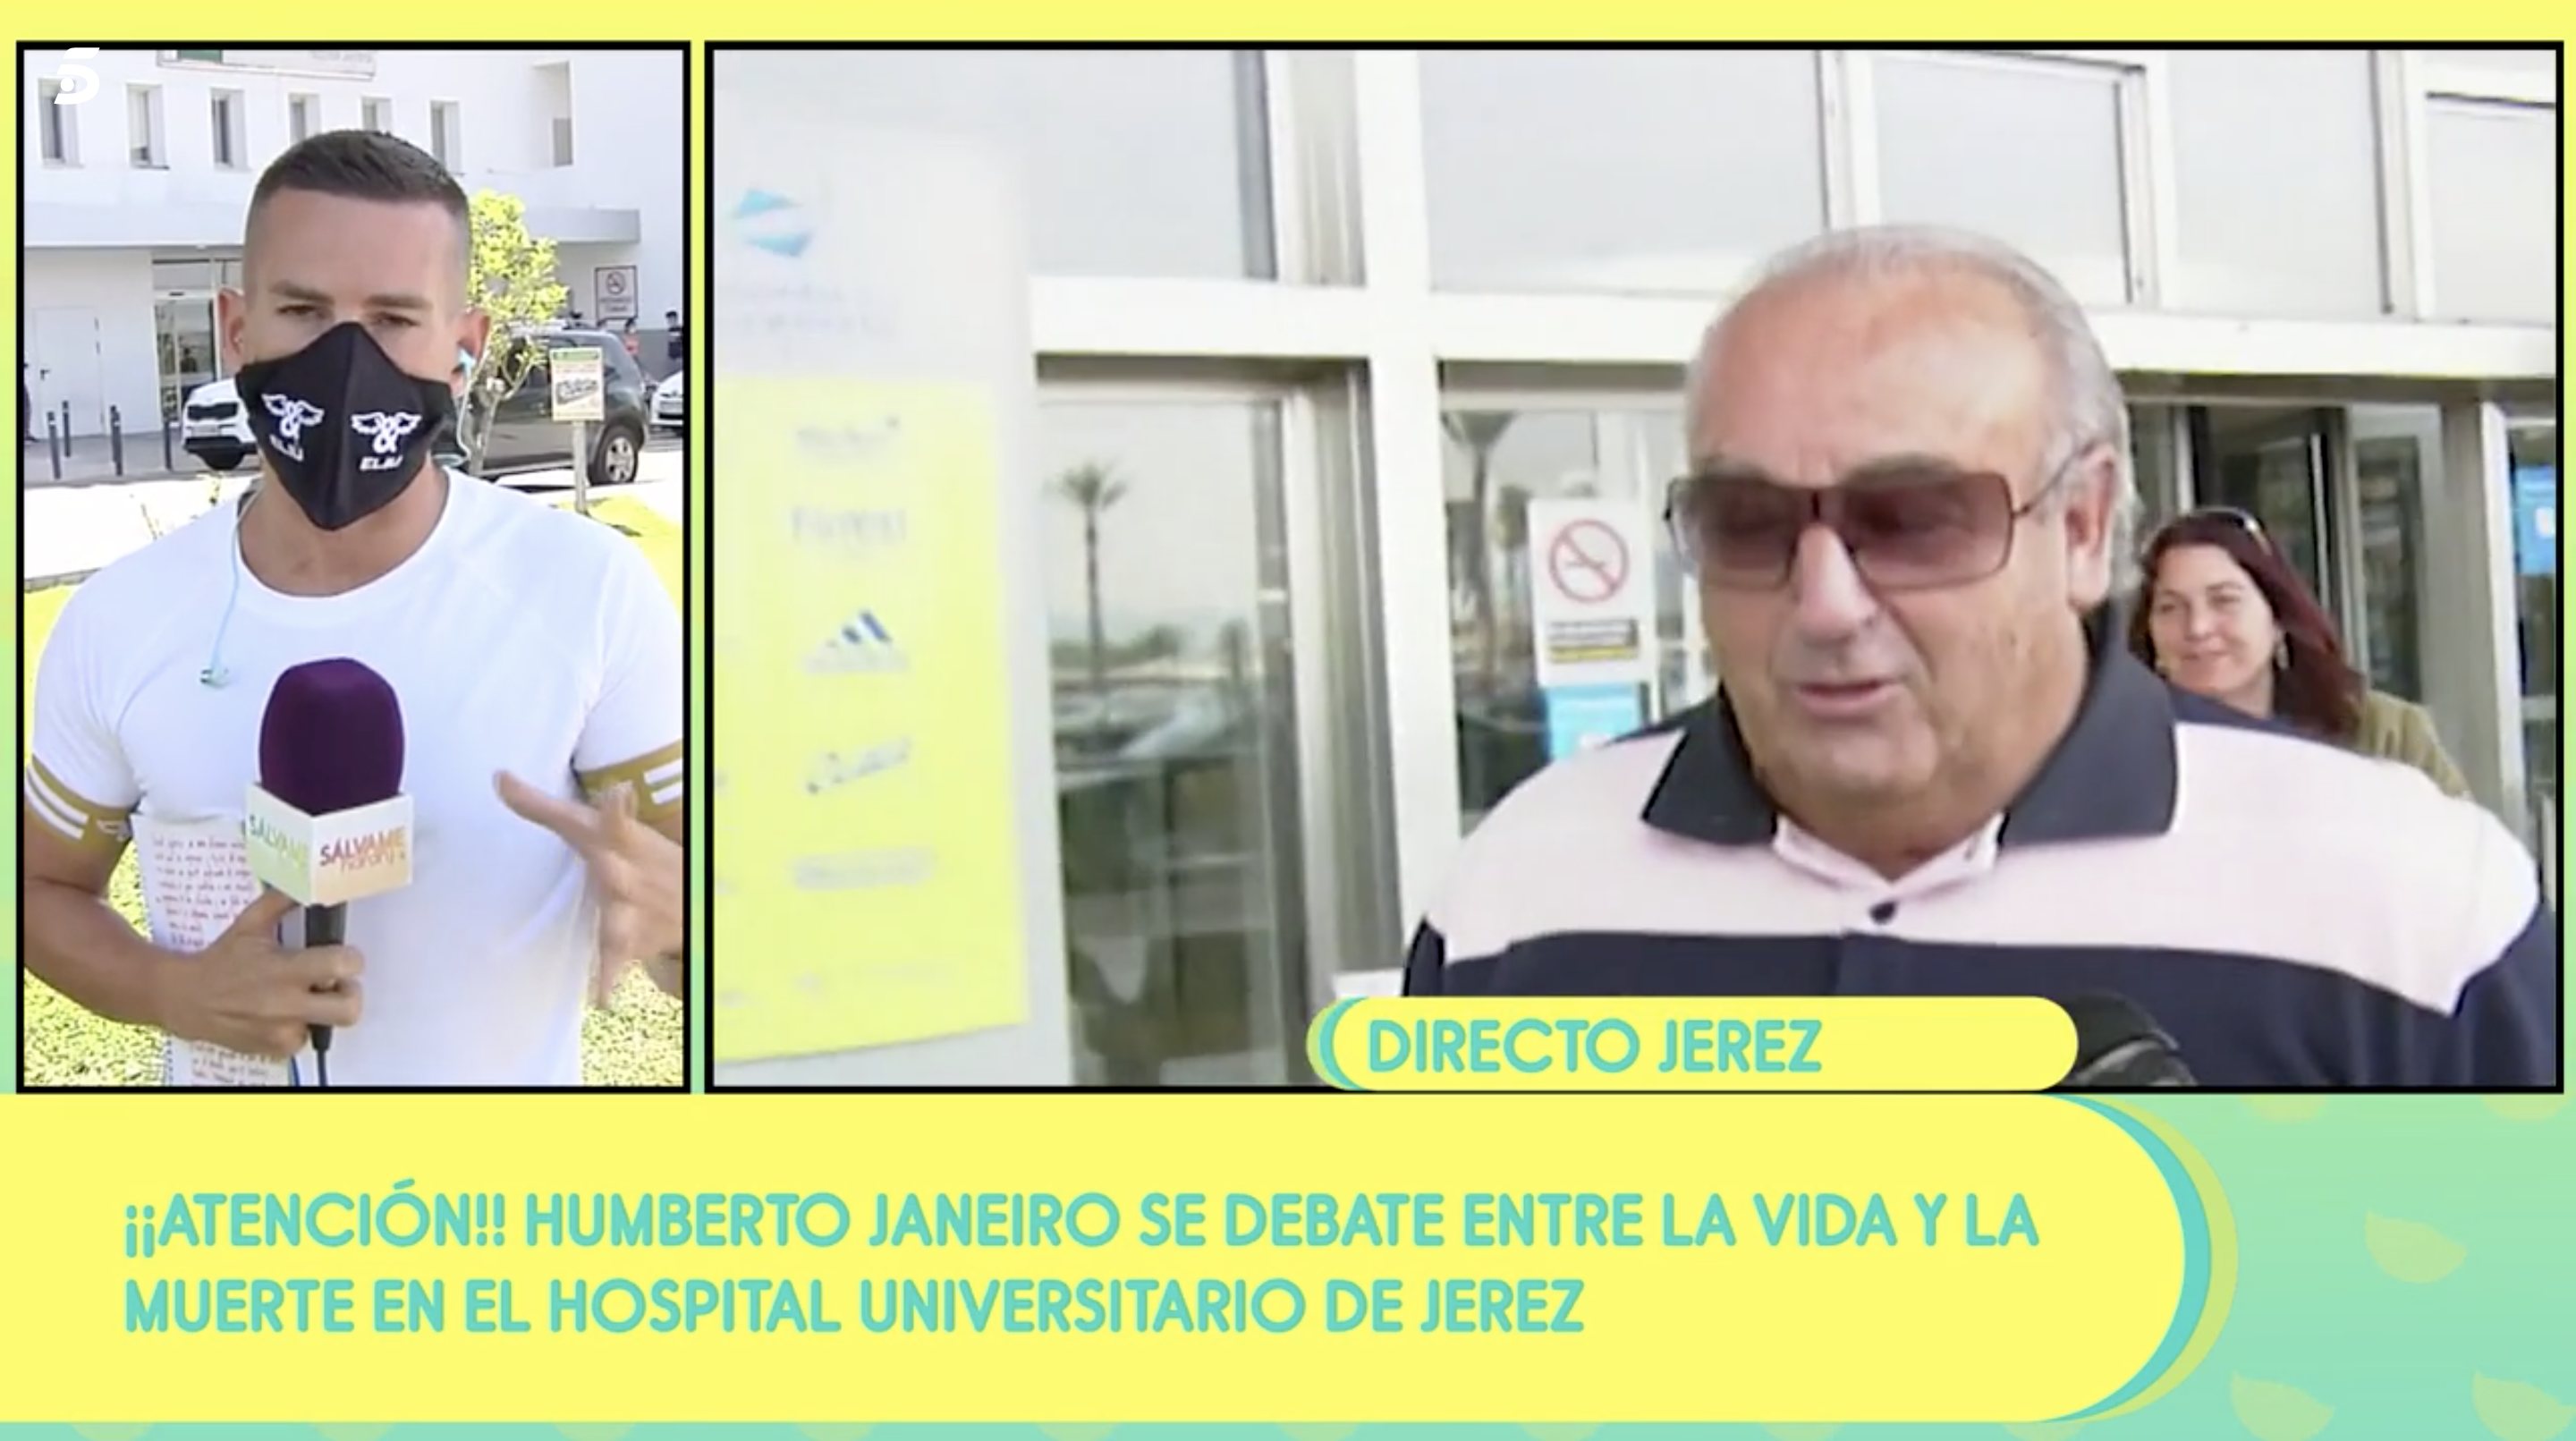 Humberto Janeiro ingreso en parada cardiorrespiratoria | Foto: Telecinco.es